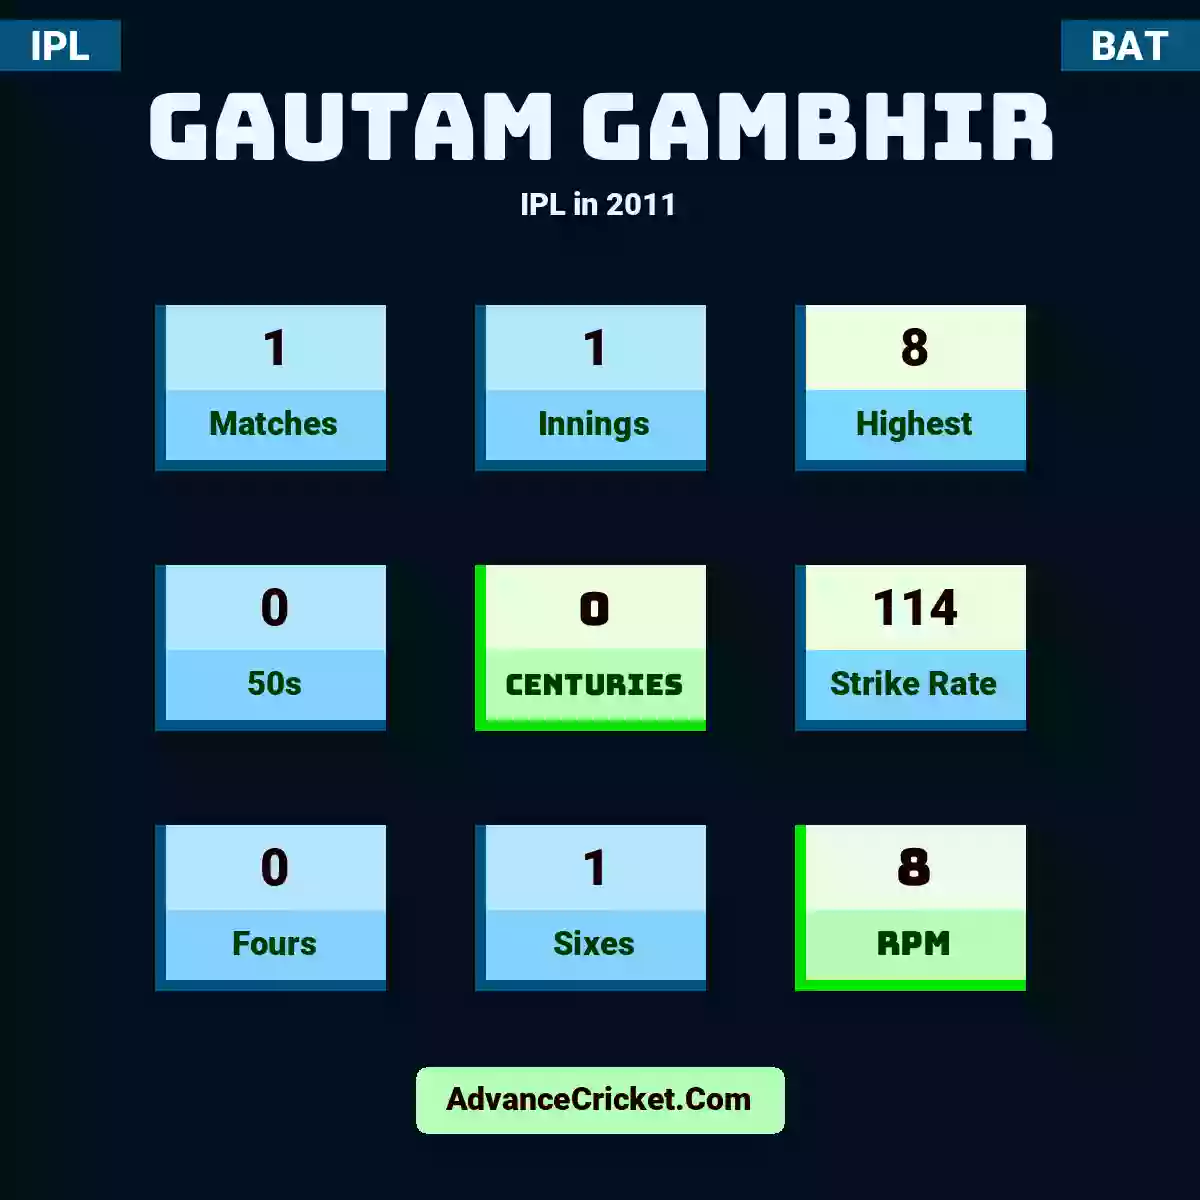 Gautam Gambhir IPL  in 2011, Gautam Gambhir played 15 matches, scored 75 runs as highest, 2 half-centuries, and 0 centuries, with a strike rate of 119. G.Gambhir hit 44 fours and 3 sixes, with an RPM of 25.